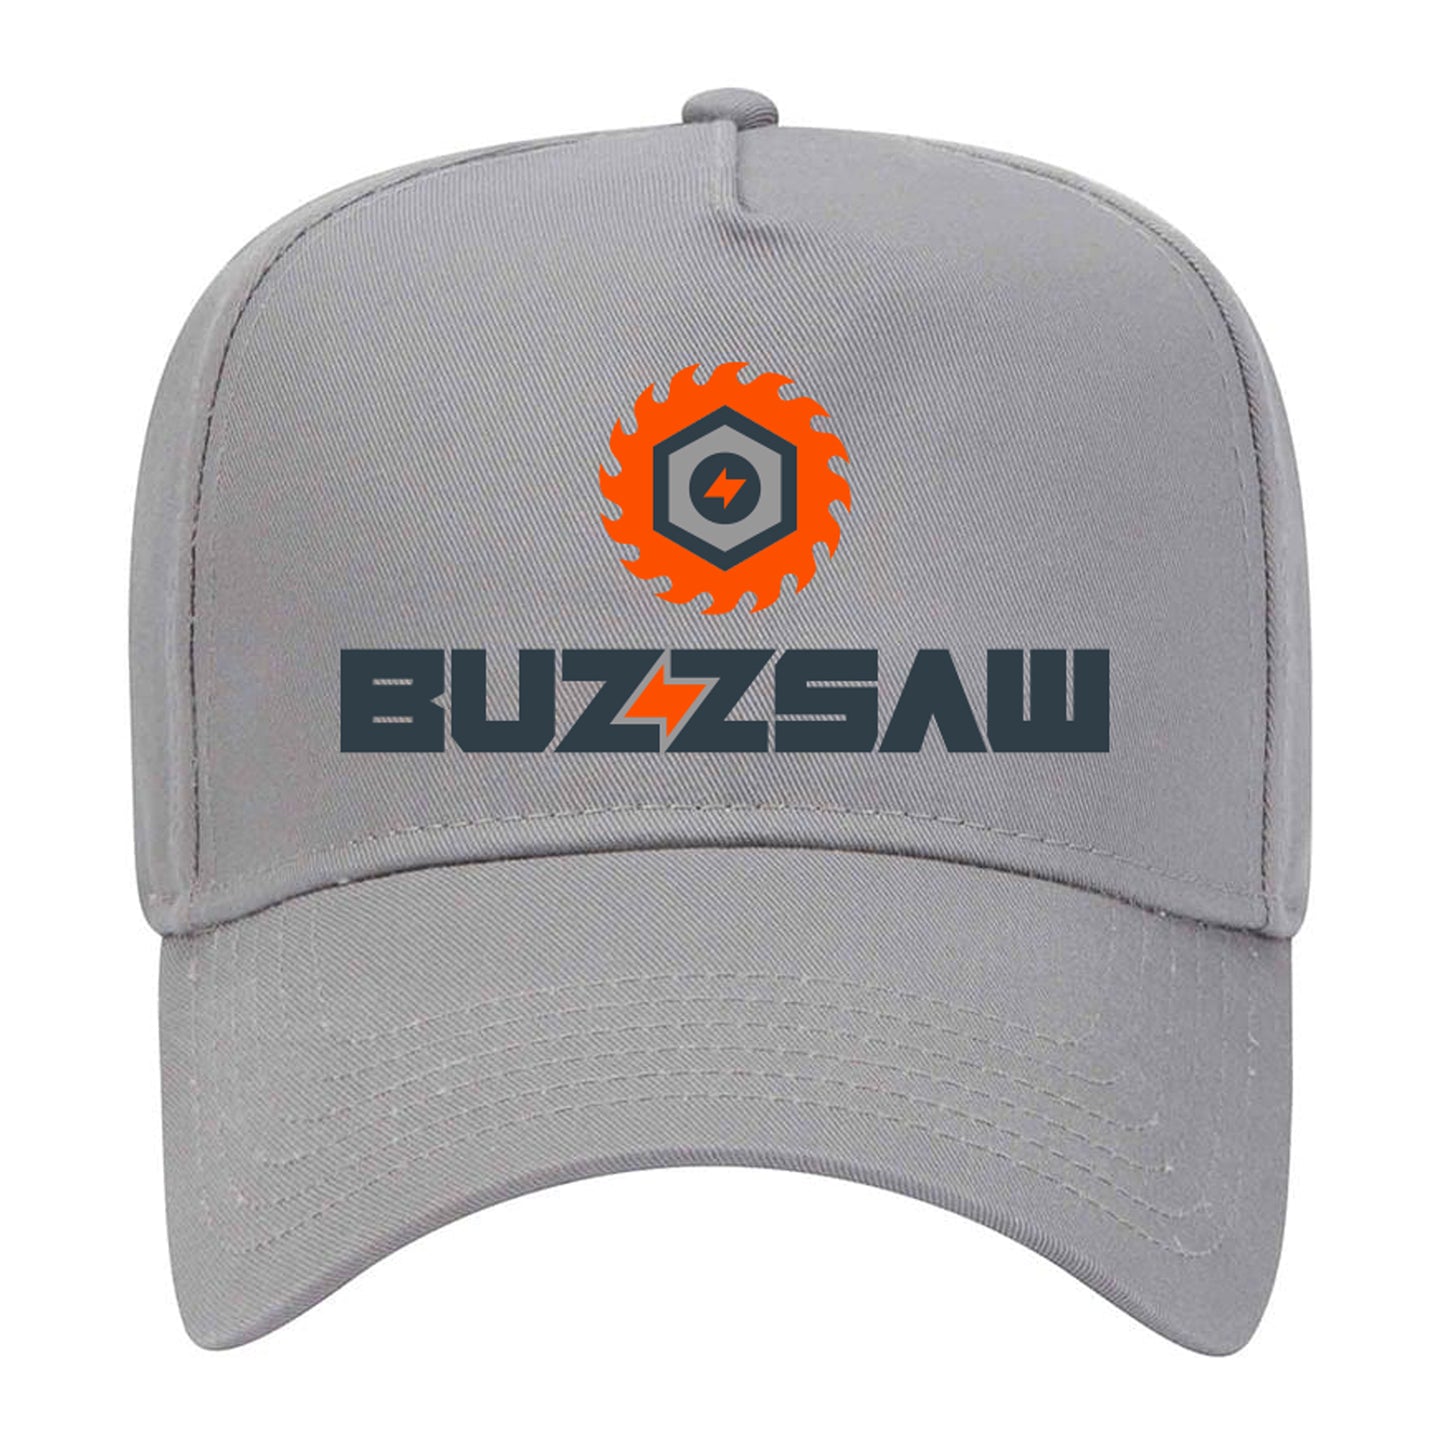 BUZZSAW - Team Hat - Grey